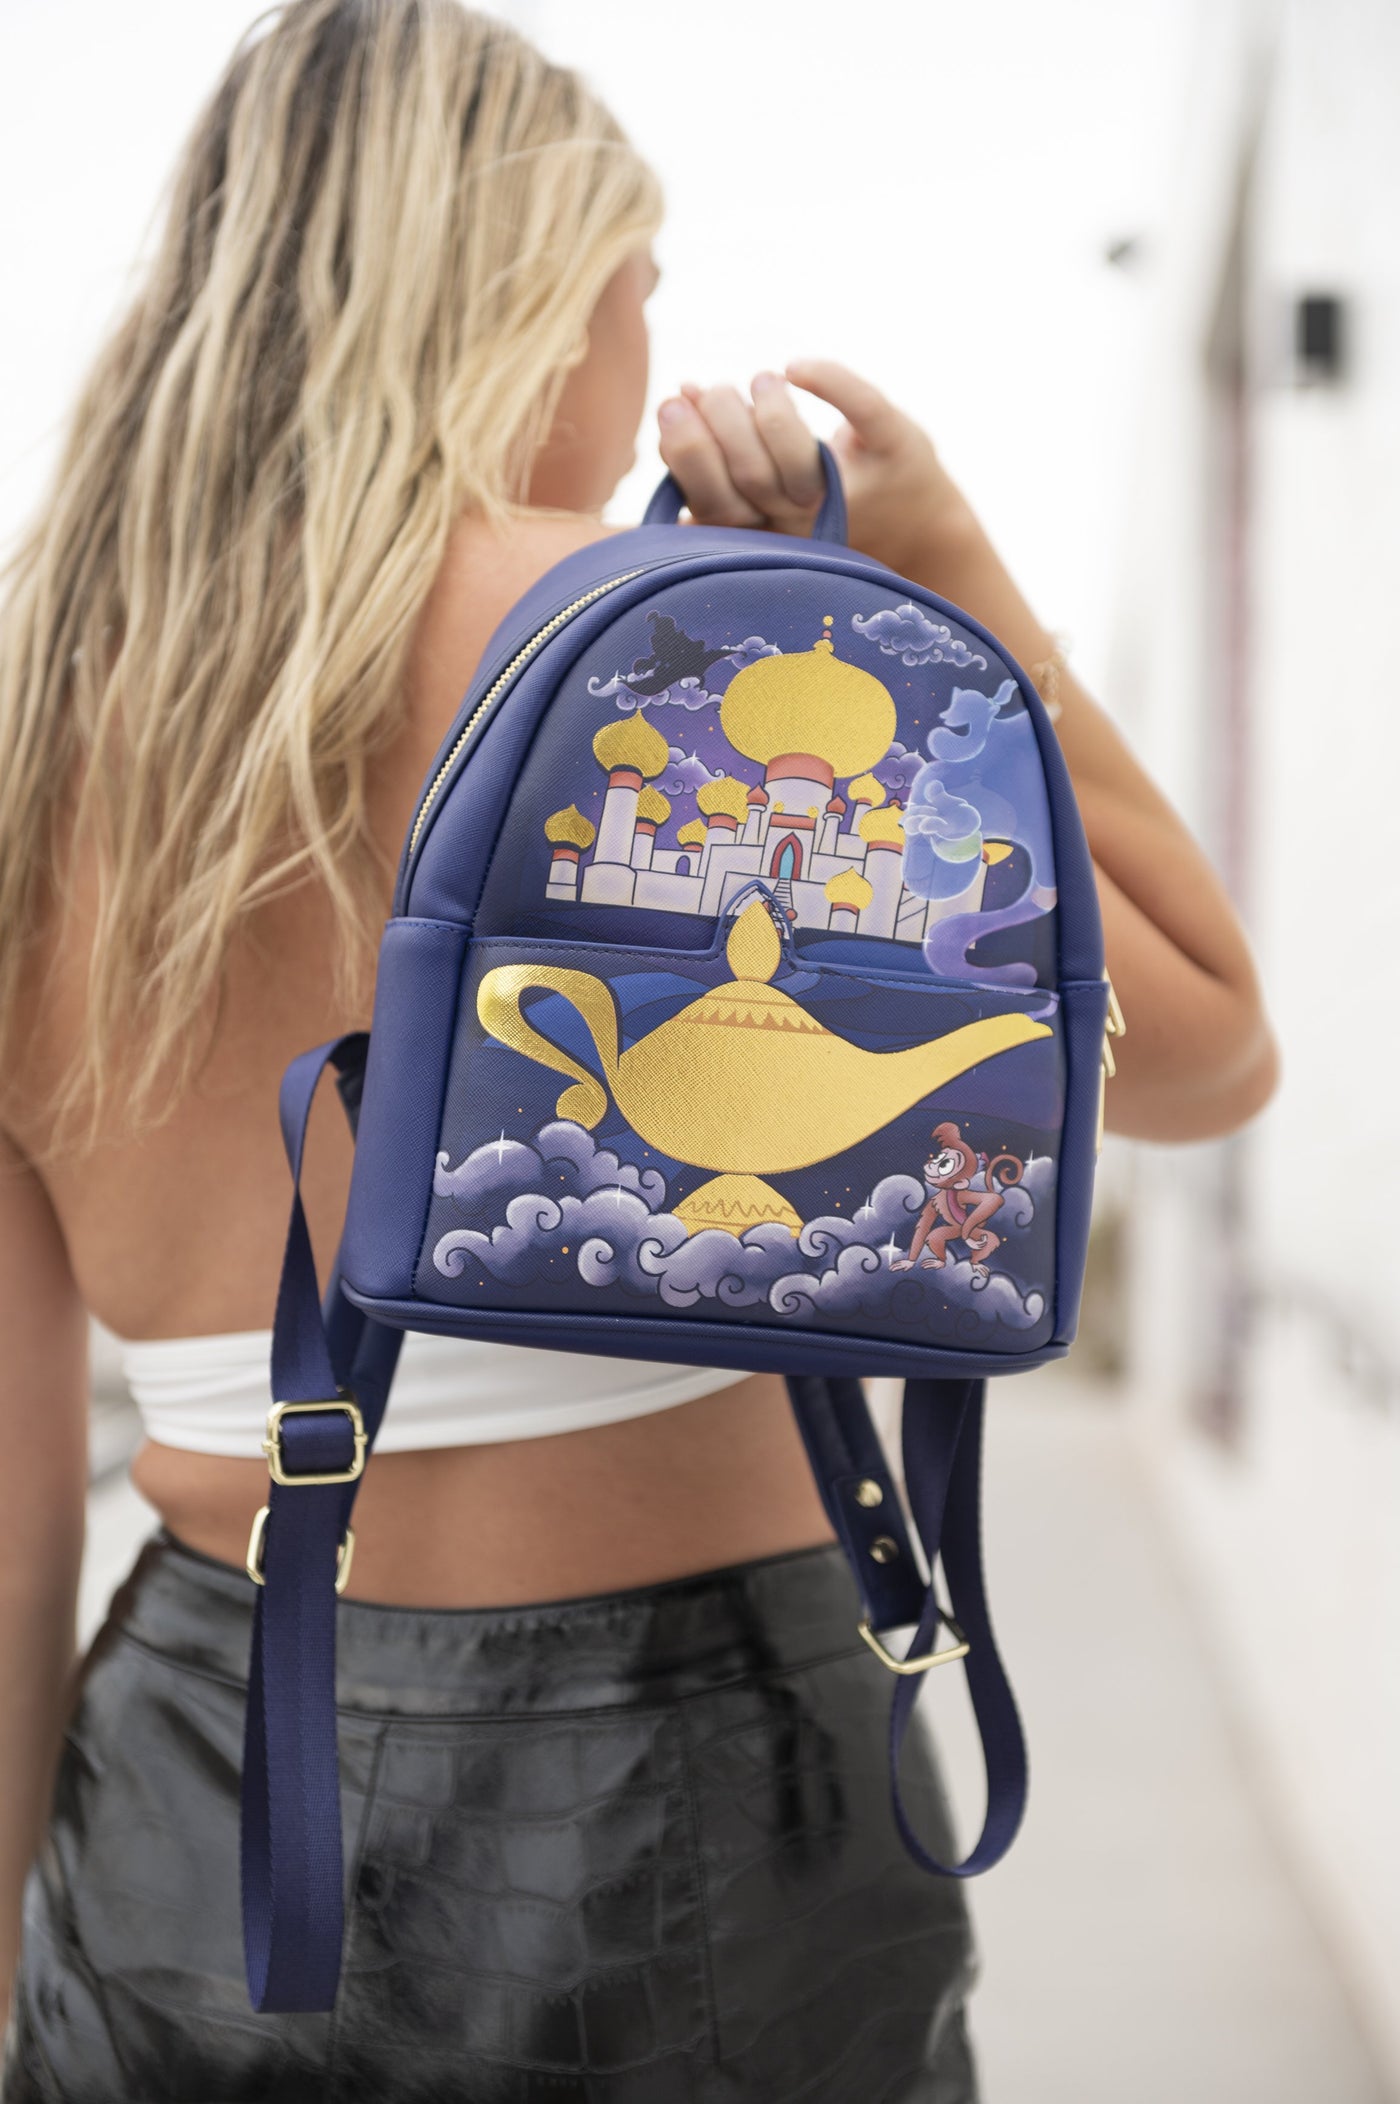 Disney Aladdin Princess Jasmine Castle Crossbody Bag